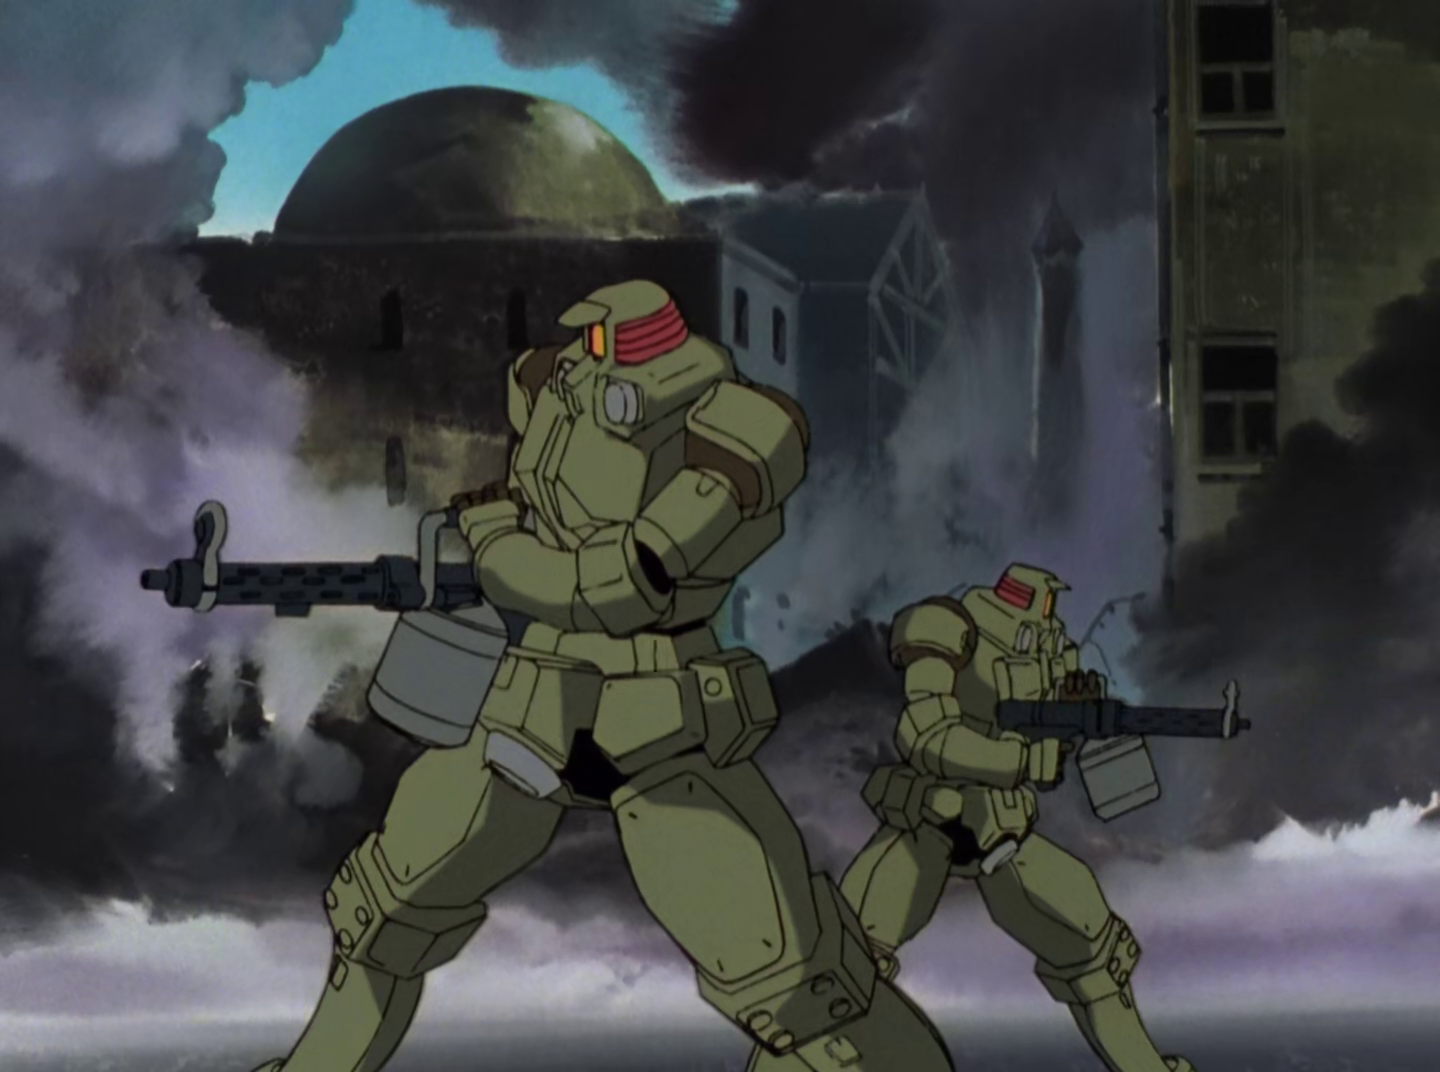 Leos firing 105mm rifle, from Gundam Wiki